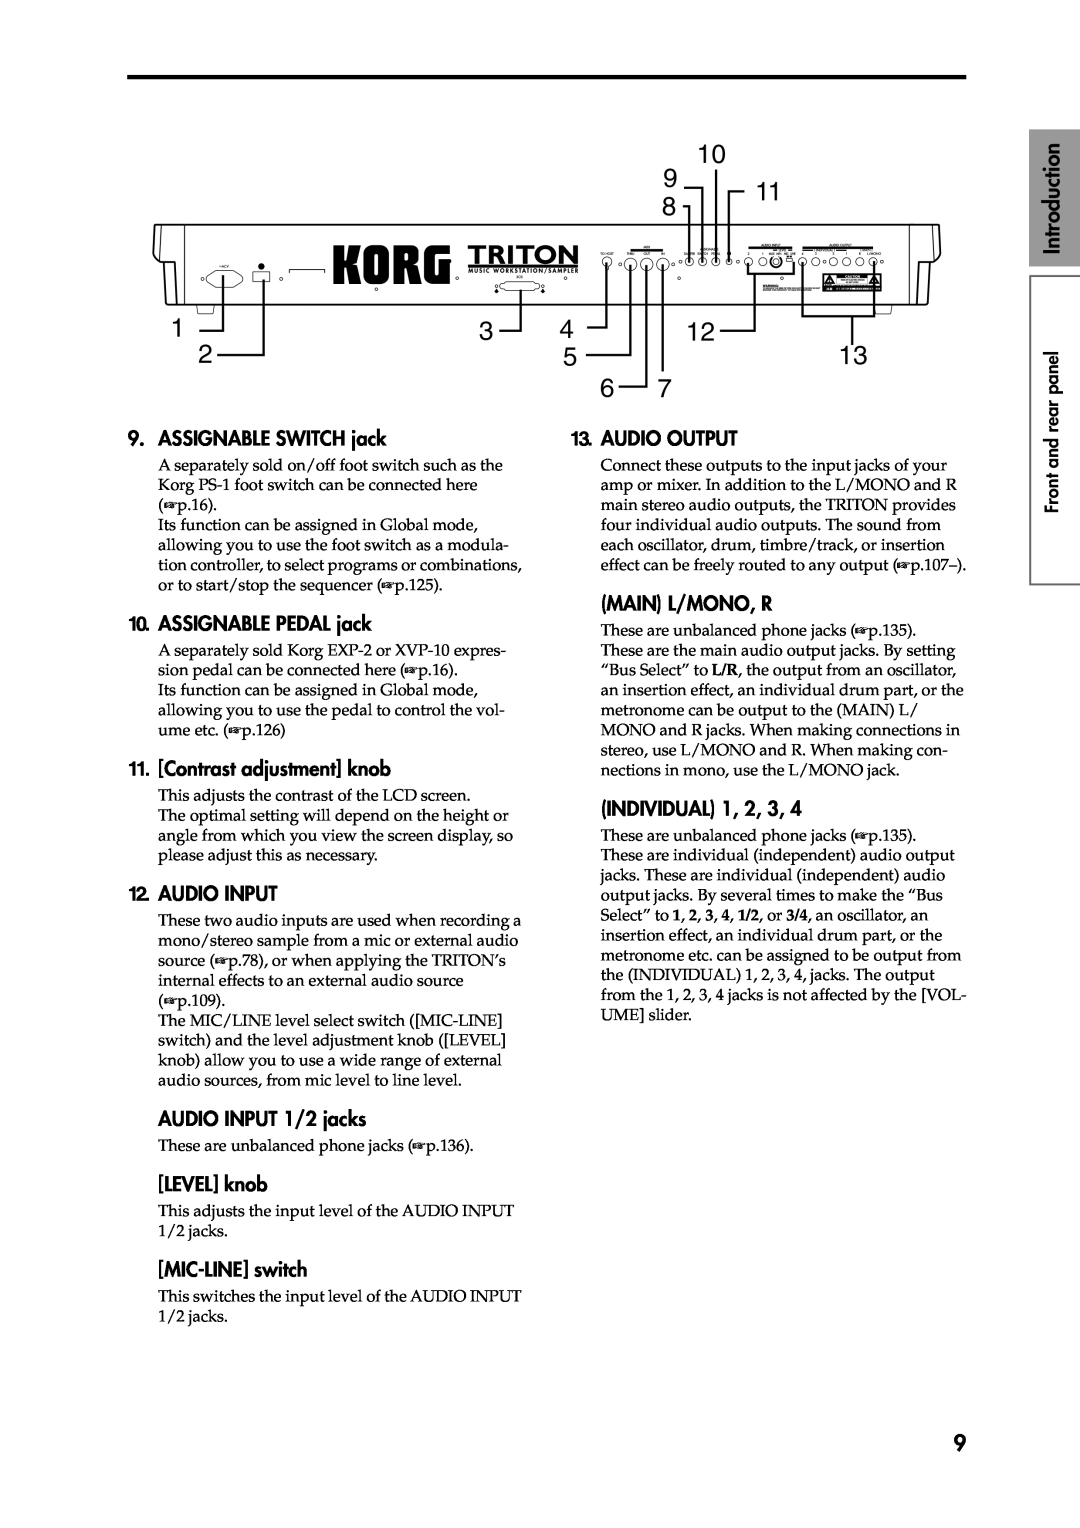 Korg Speaker System Introduction, Audio Output, ASSIGNABLE PEDAL jack, Contrast adjustment knob, Audio Input, LEVEL knob 